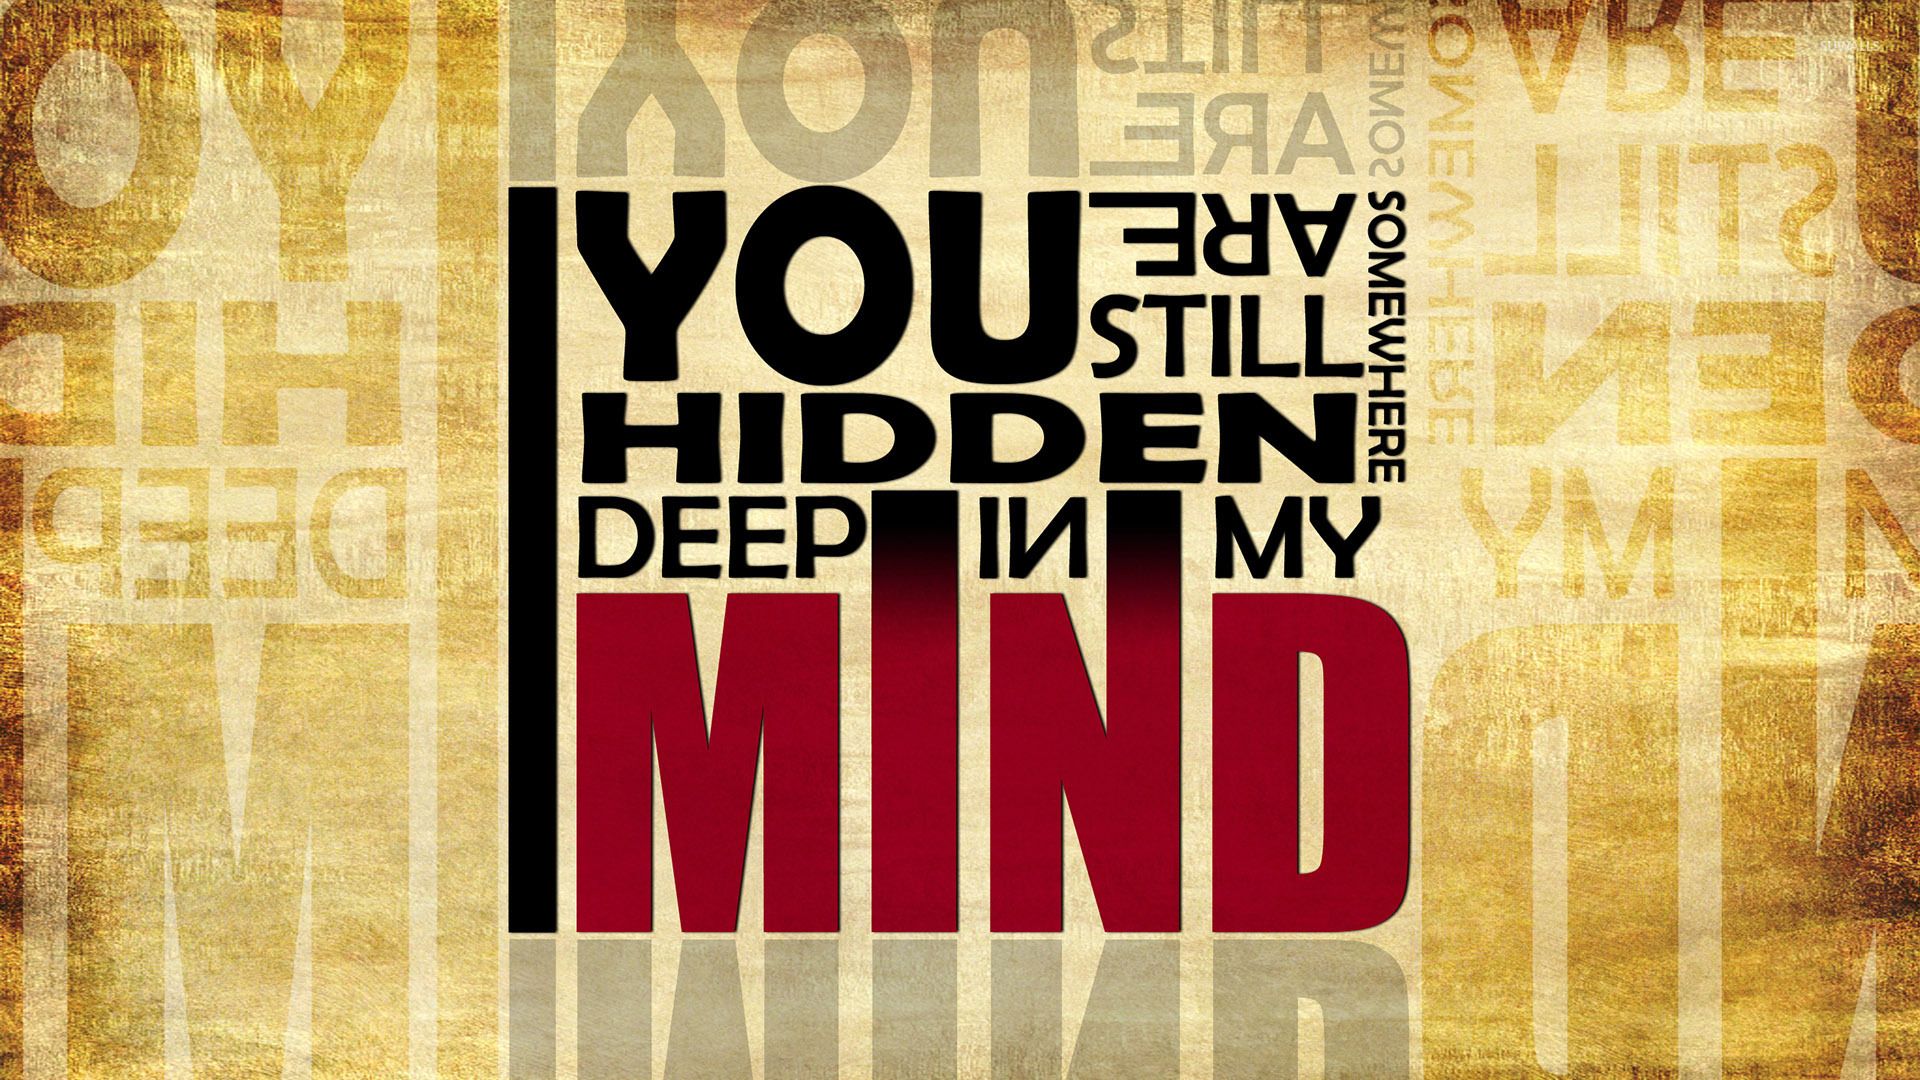 You are hidden deep in my mind wallpaper wallpaper